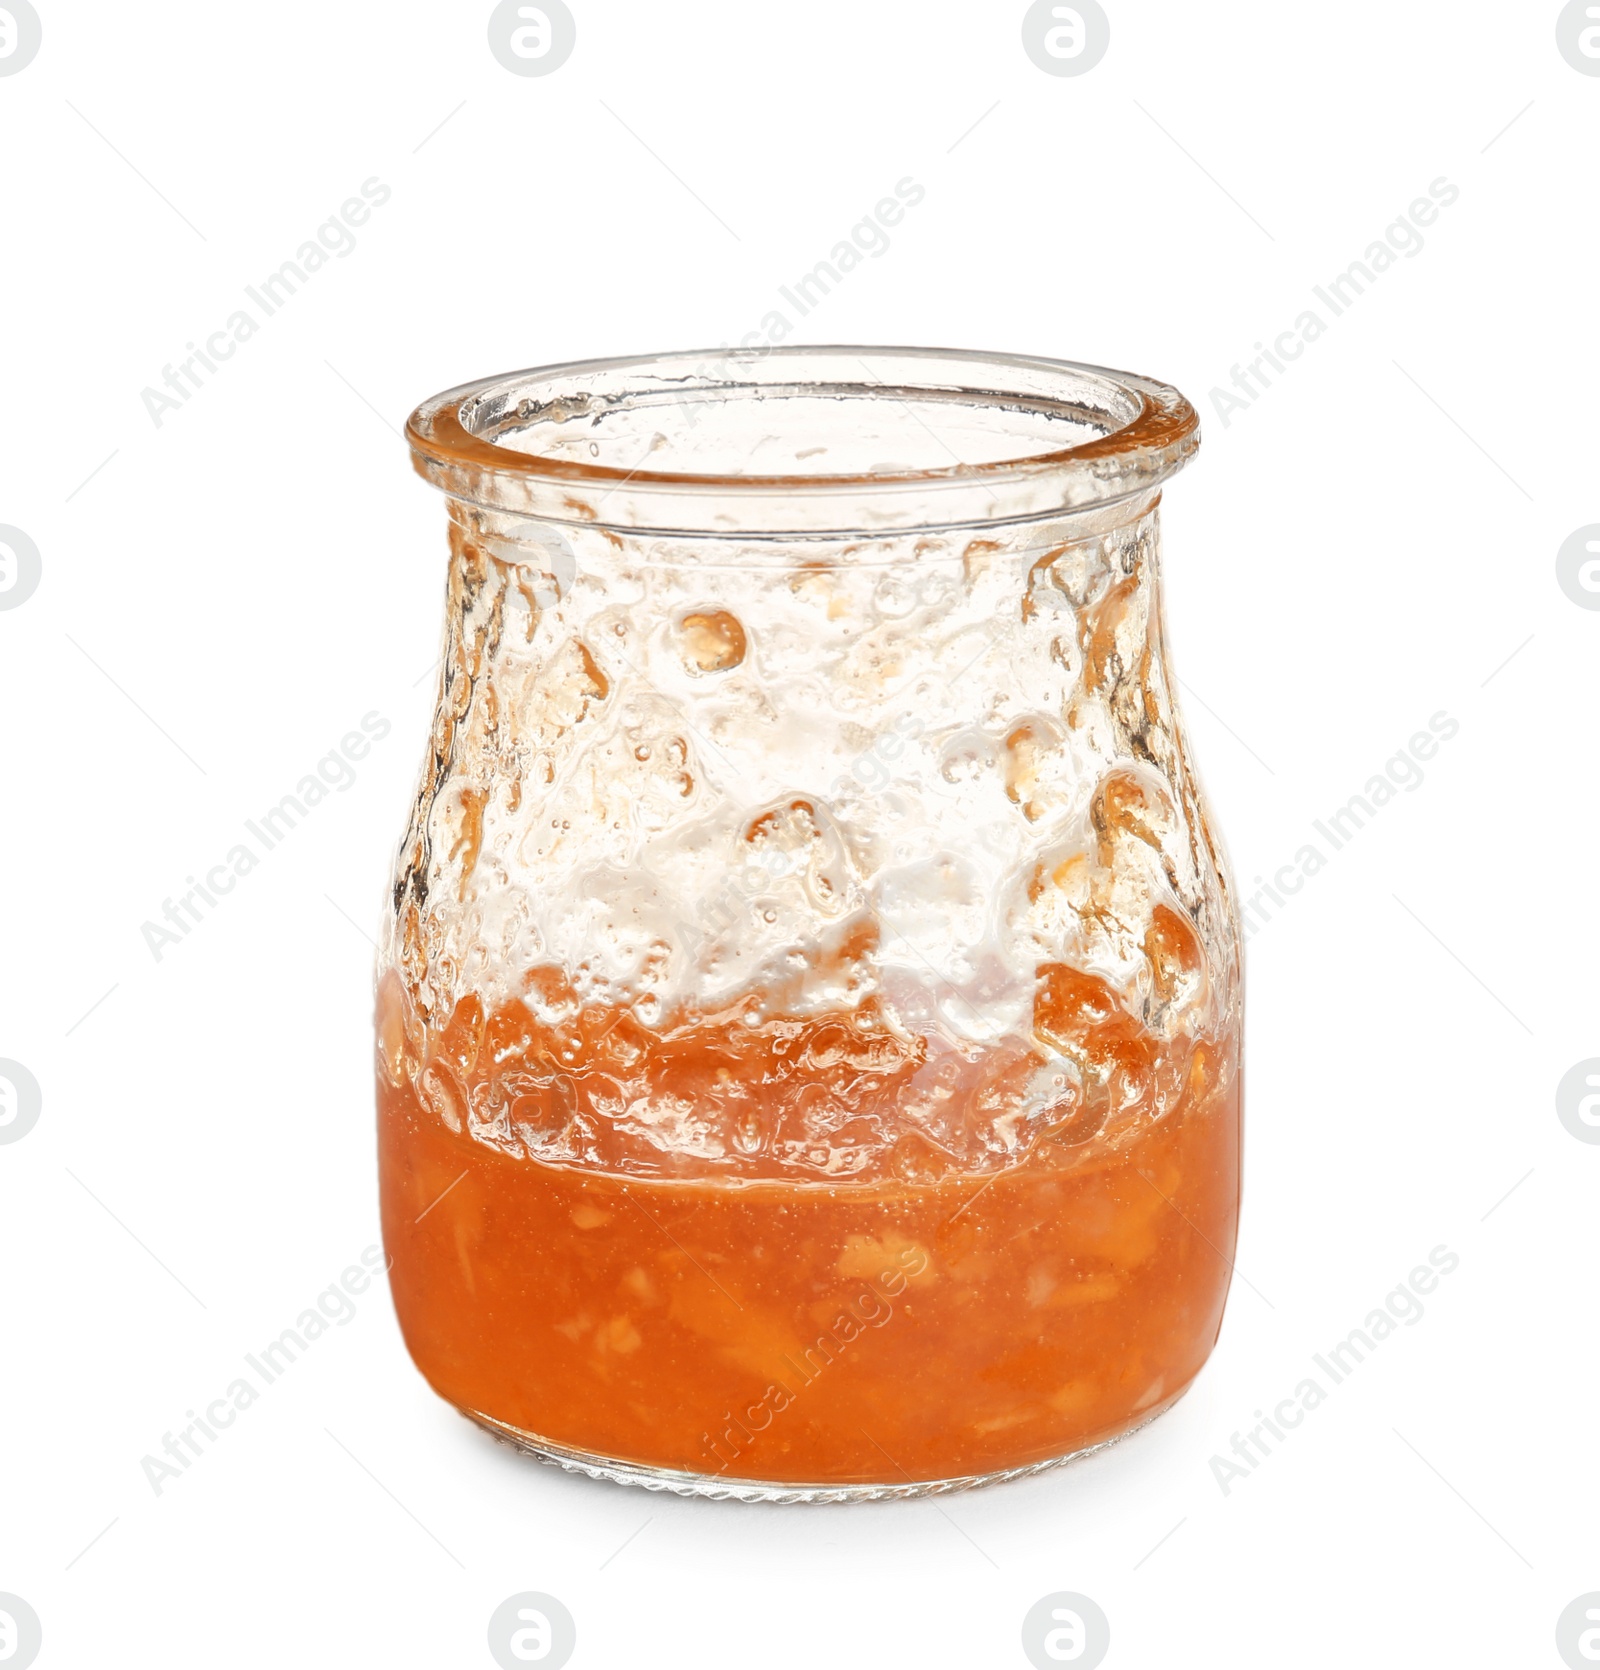 Photo of Jar with leftovers of tasty sweet jam on white background